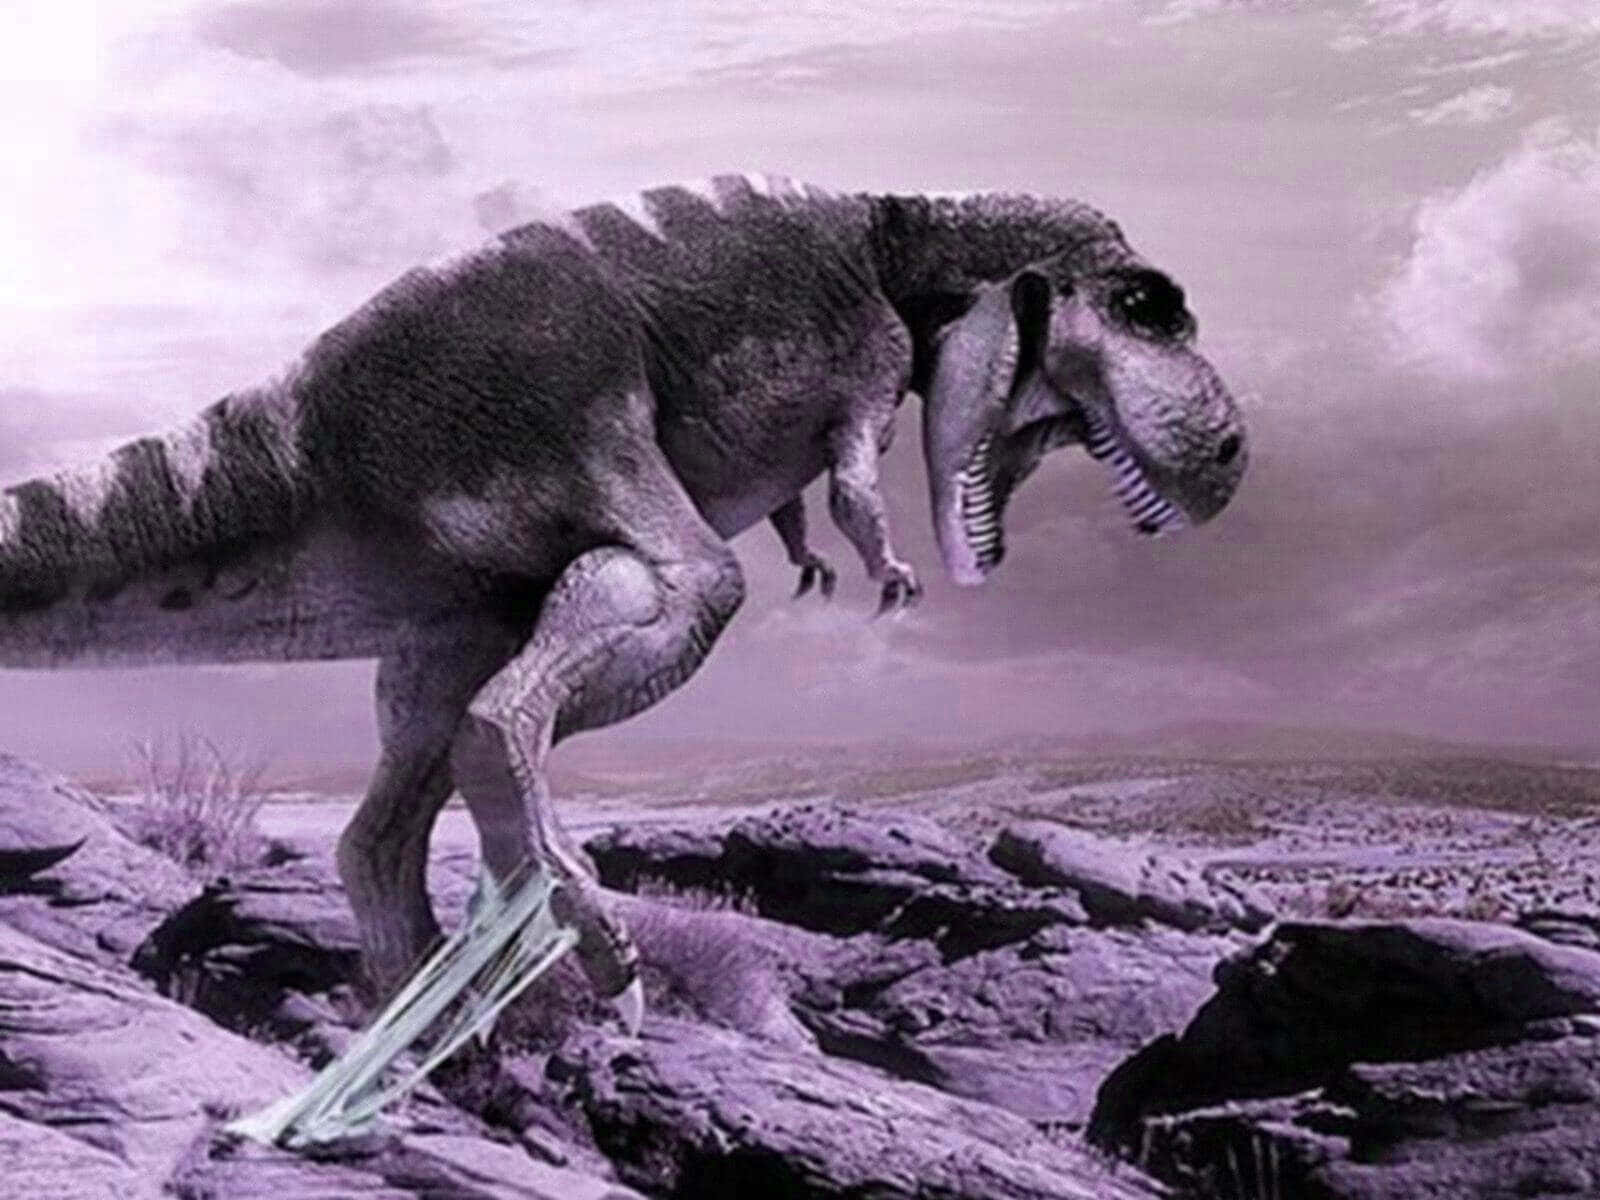 A ferocious and realistic dinosaur roams the landscape. Wallpaper